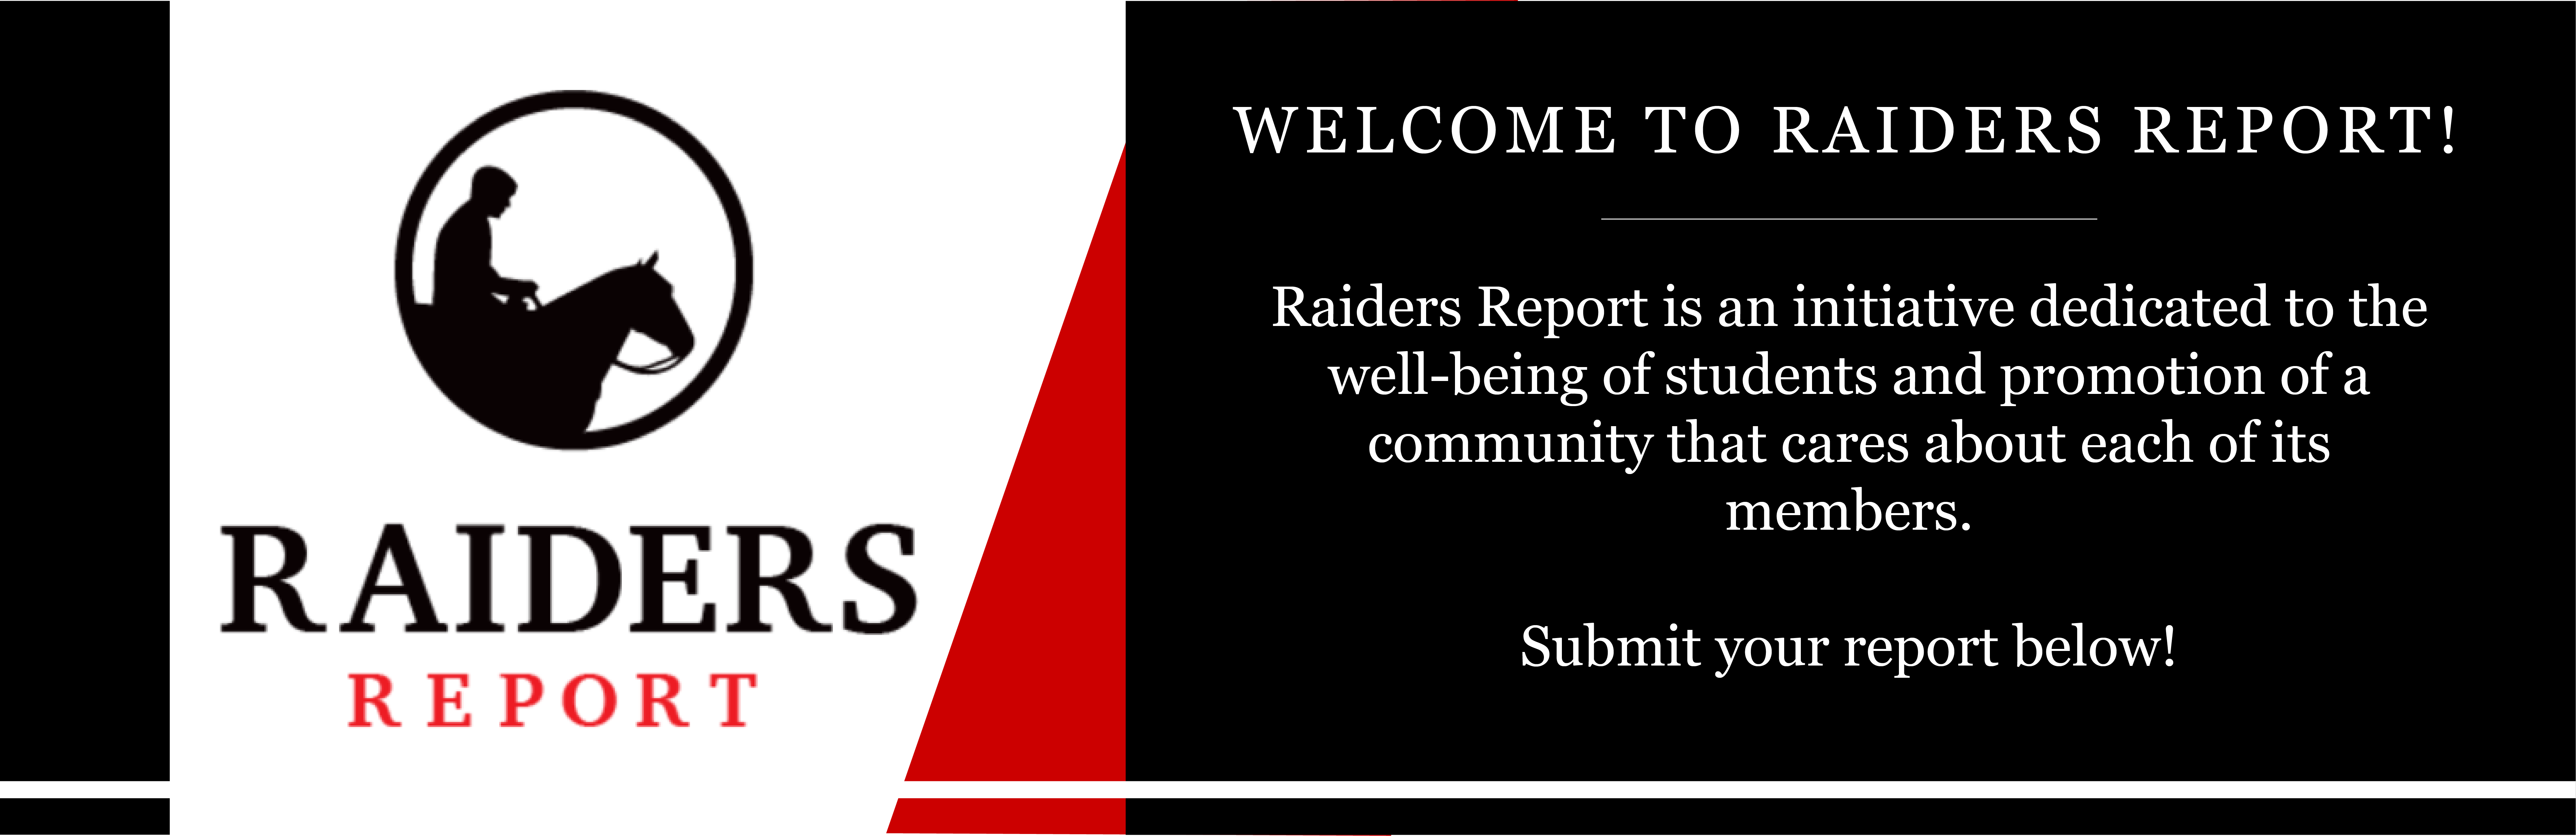 Raiders Report Header